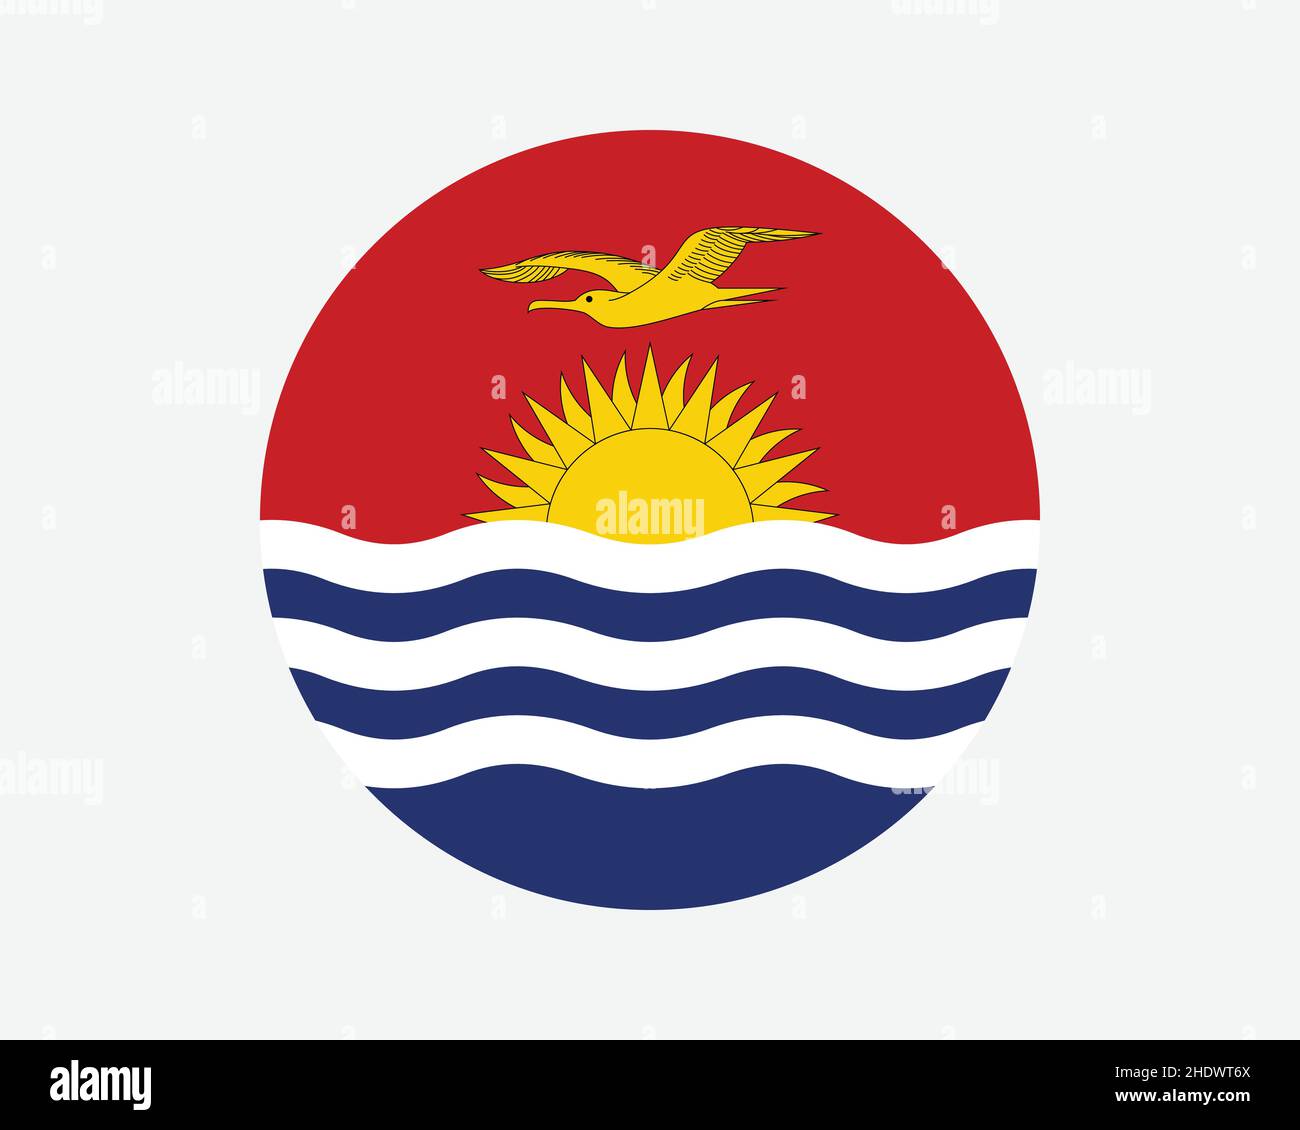 Kiribati Round Country Flag. Kiribati Circle National Flag. Republic of Kiribati Circular Shape Button Banner. EPS Vector Illustration. Stock Vector